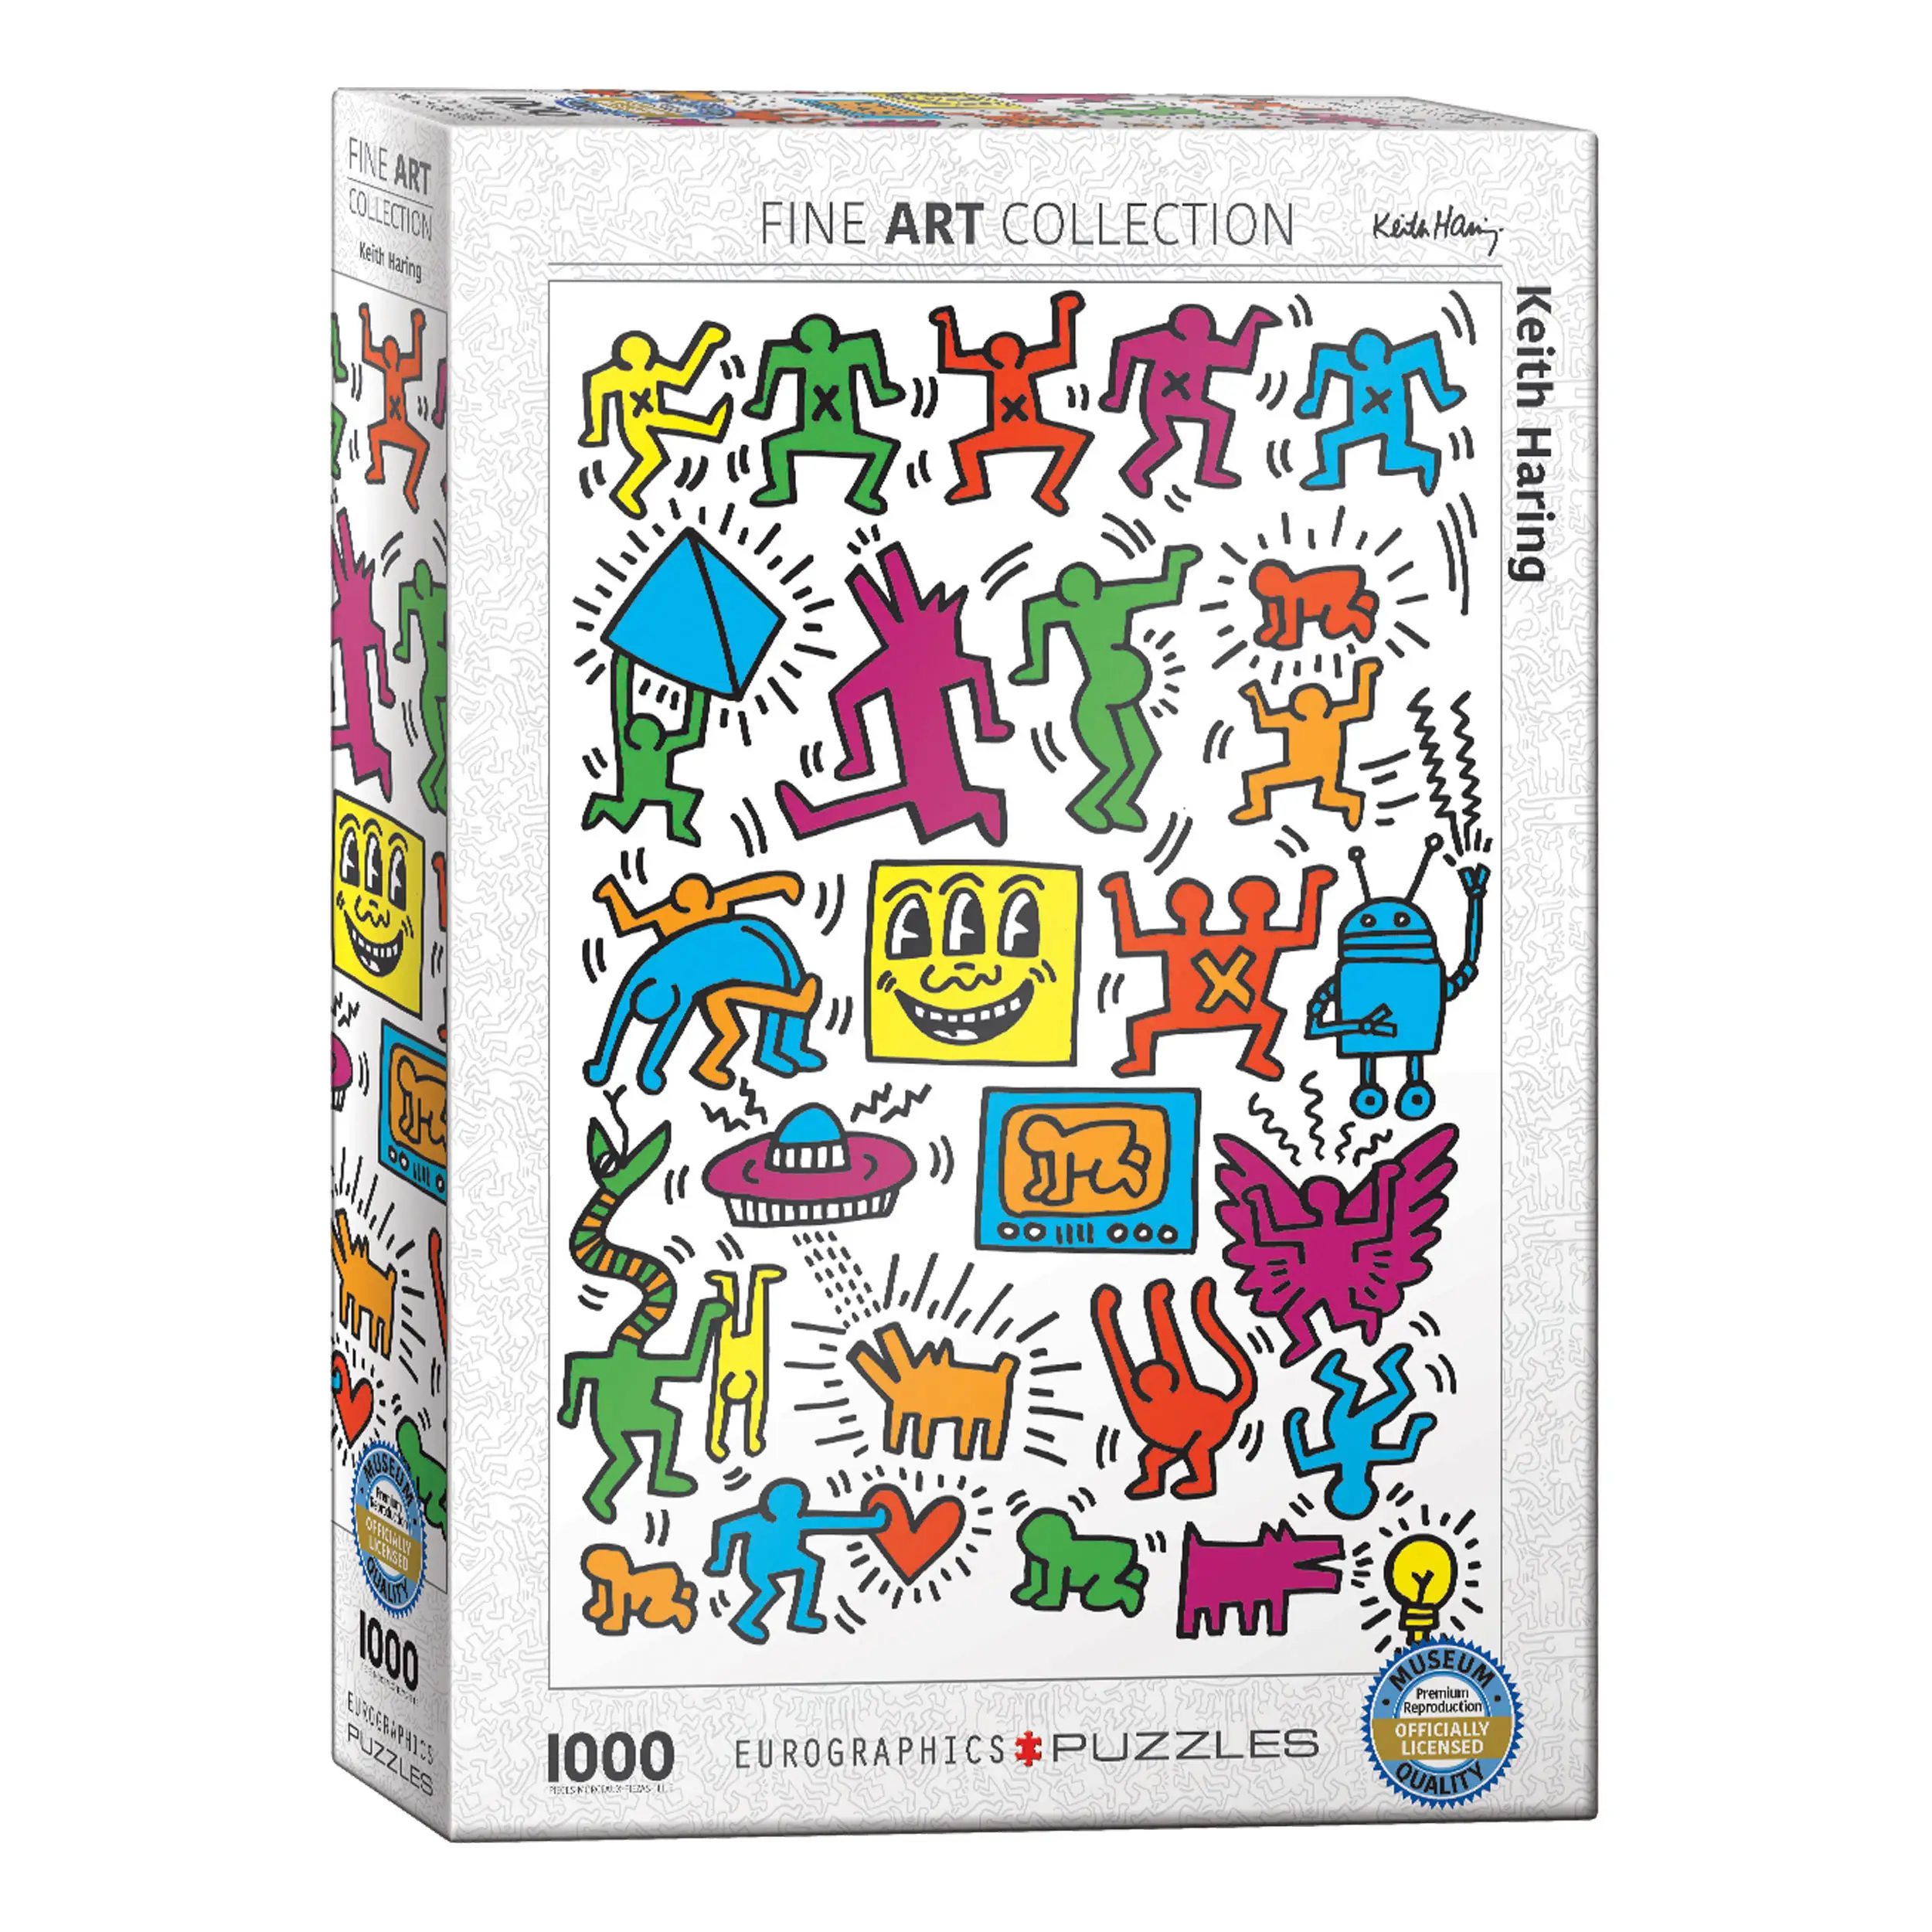 Puzzle Collage Keith Haring von